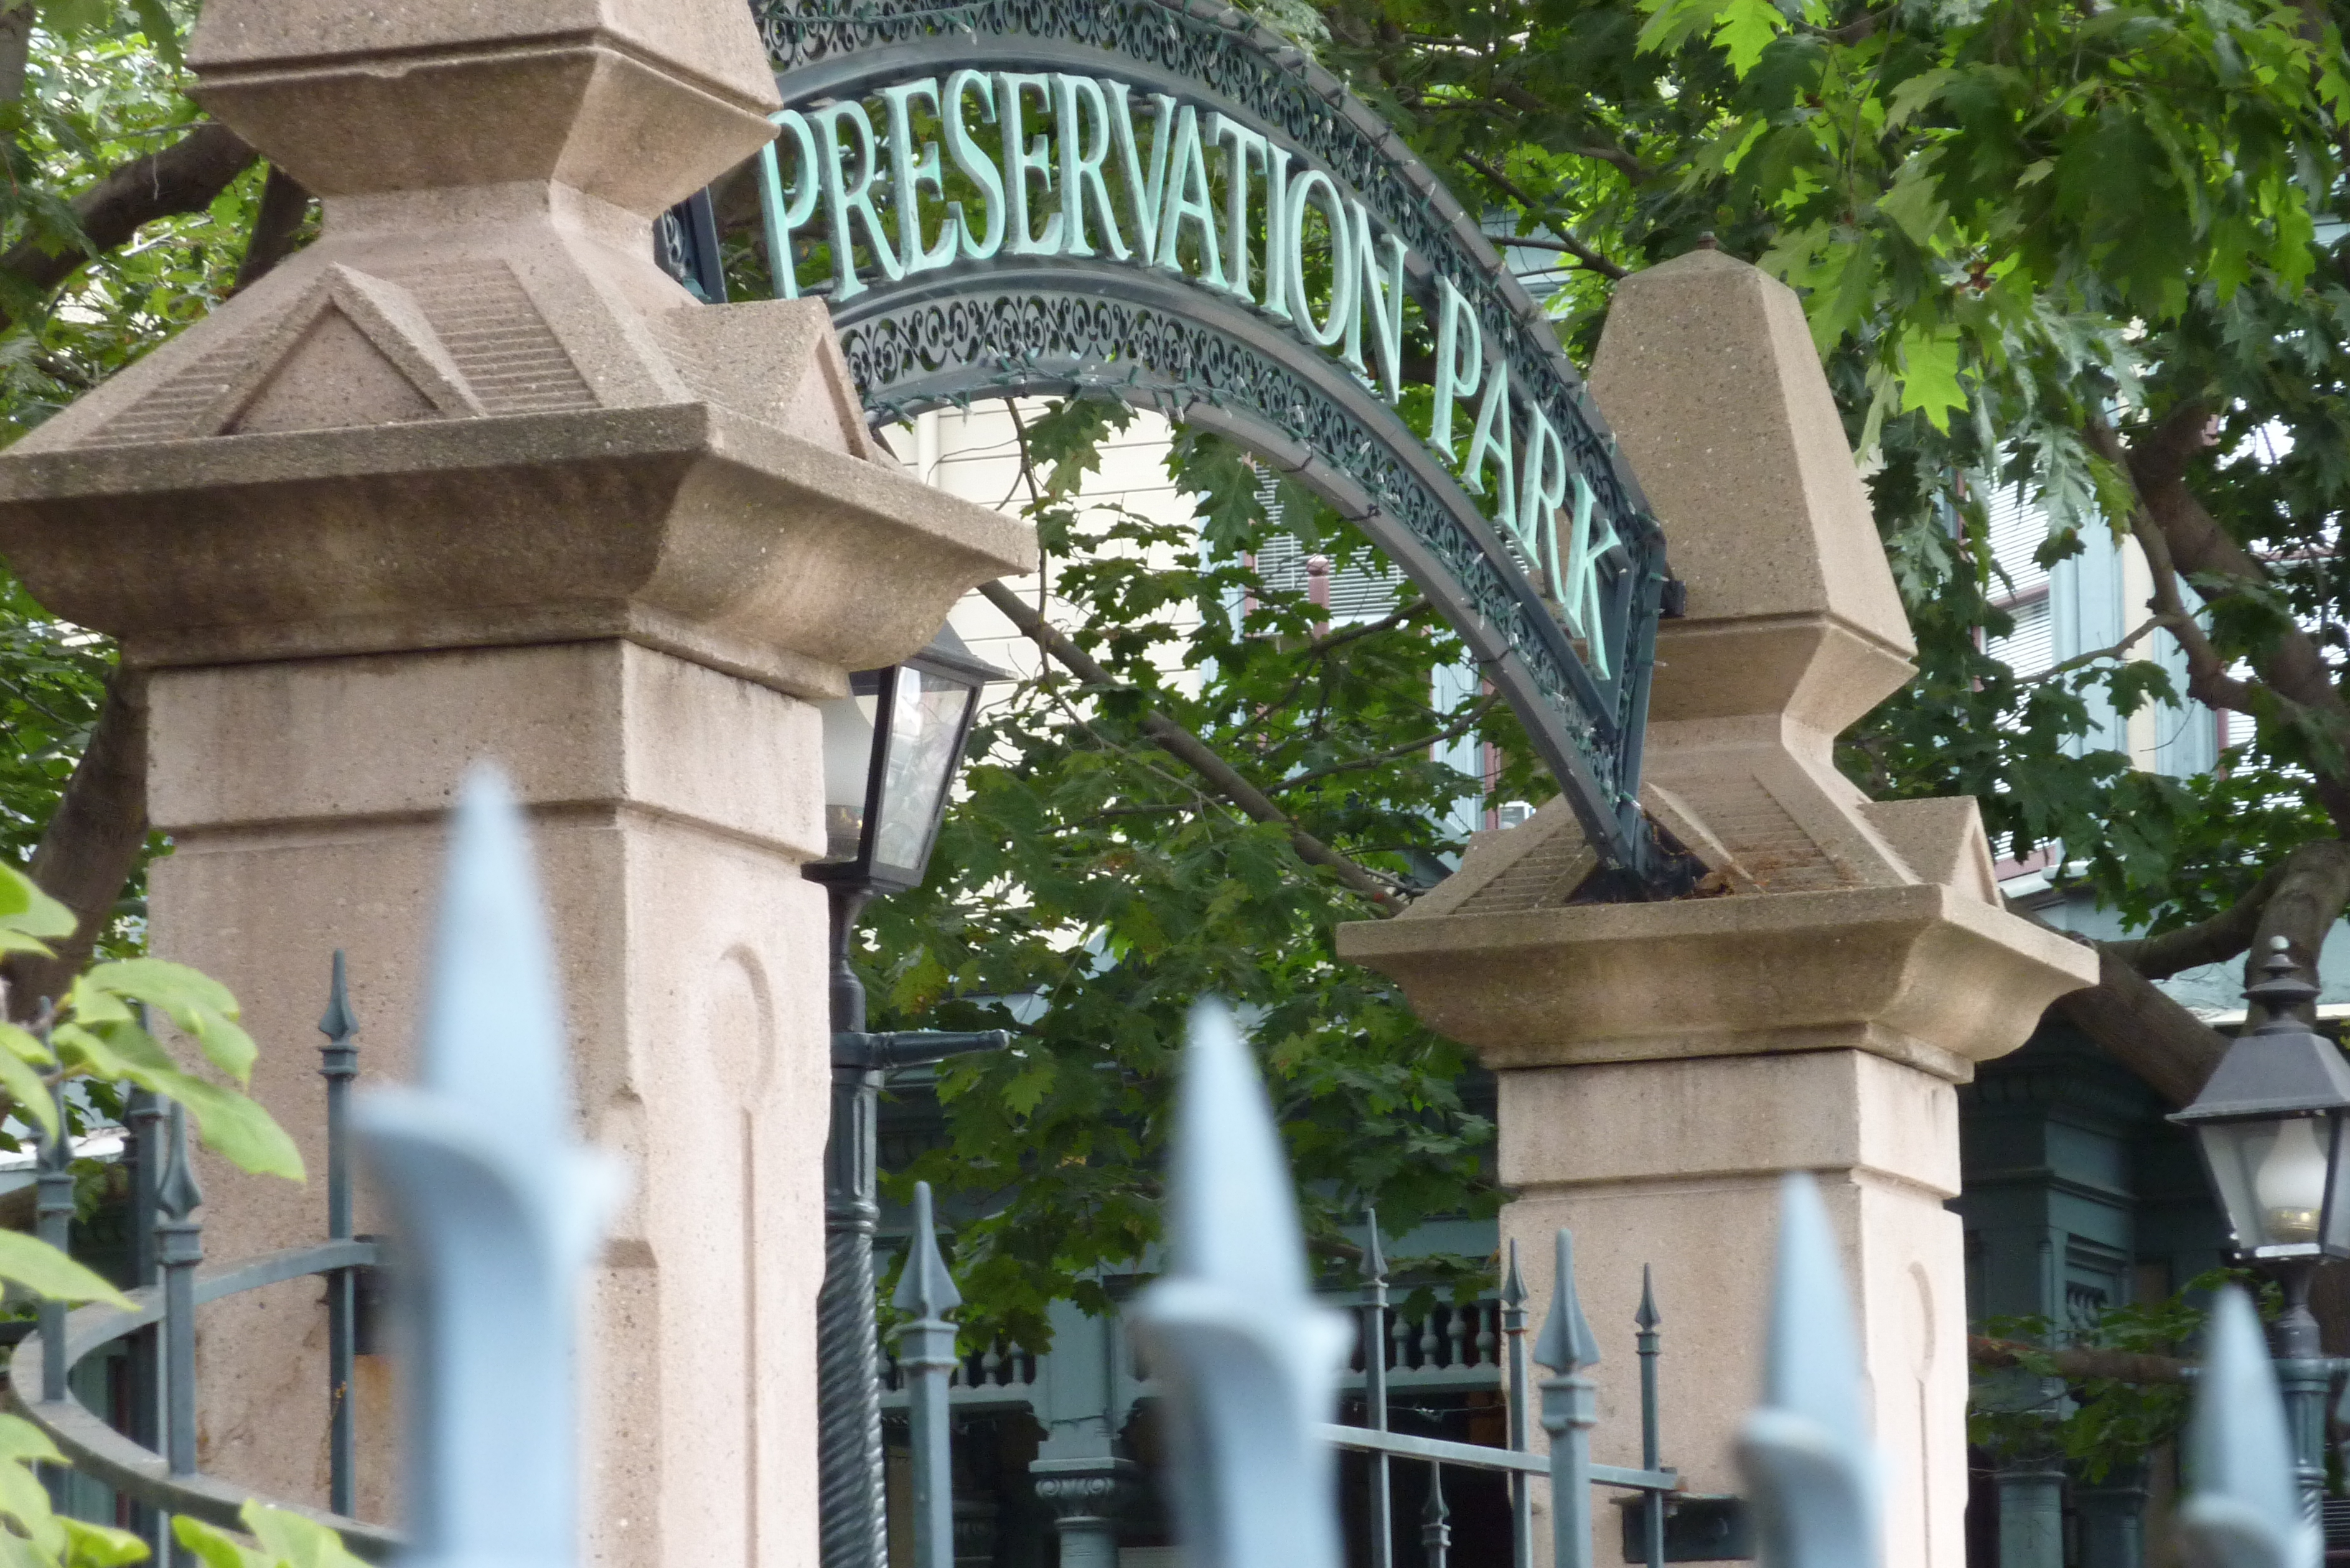 The gates of Preservation Park